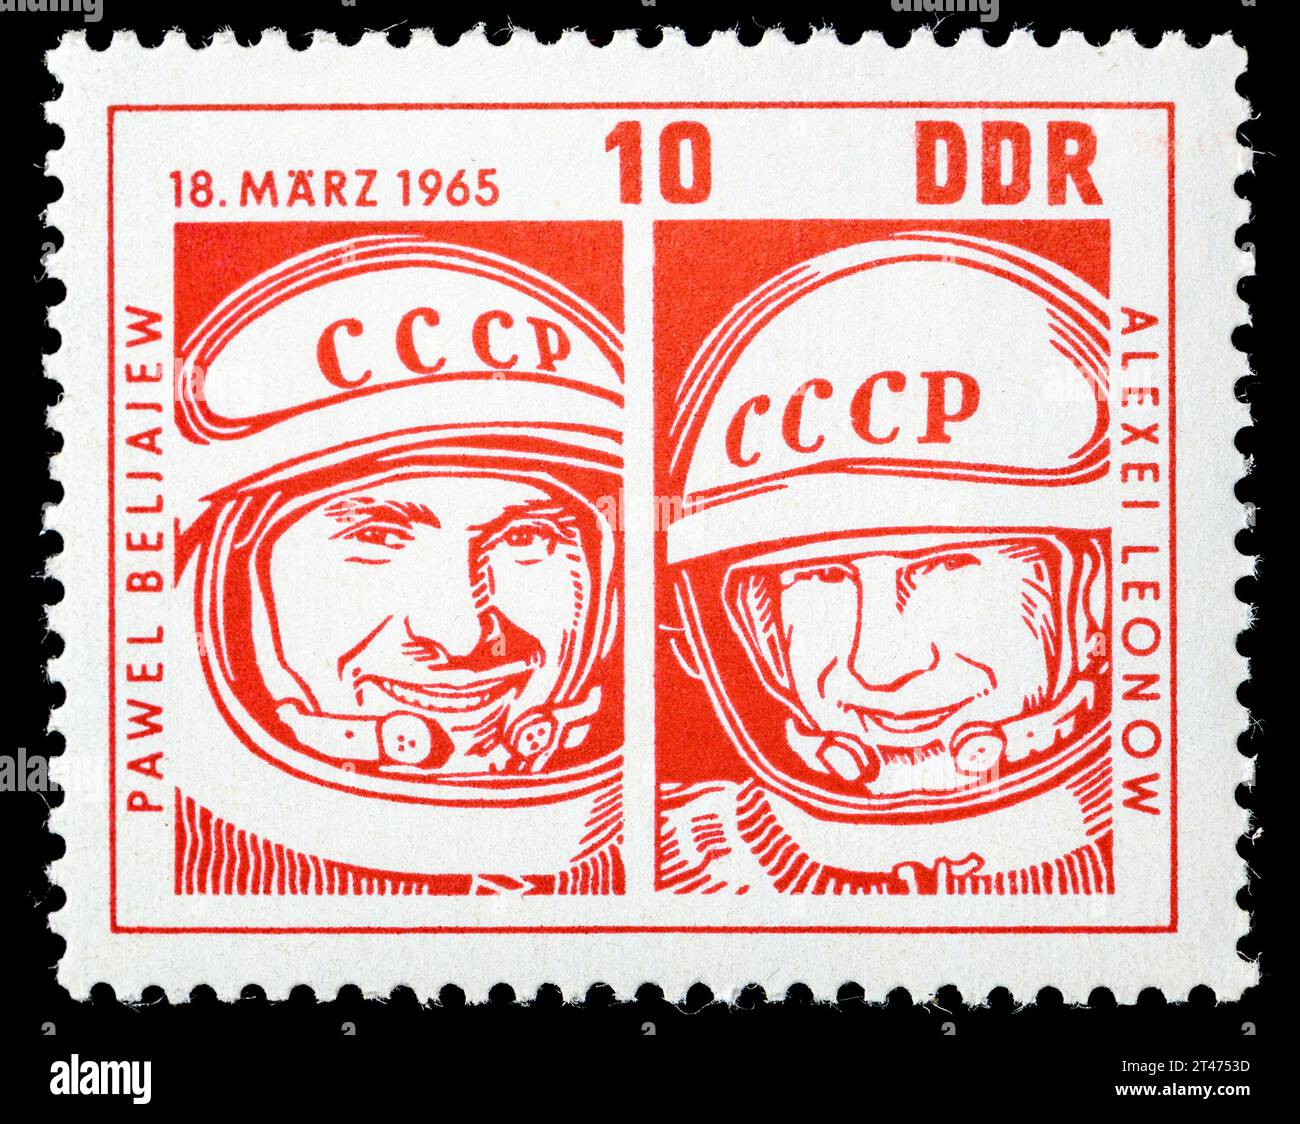 East German (DDR) postage stamp (1965) : First spacewalk - by Pavel Belyayev (1925-1970), Alexei Leonov (1934-2019) Stock Photo